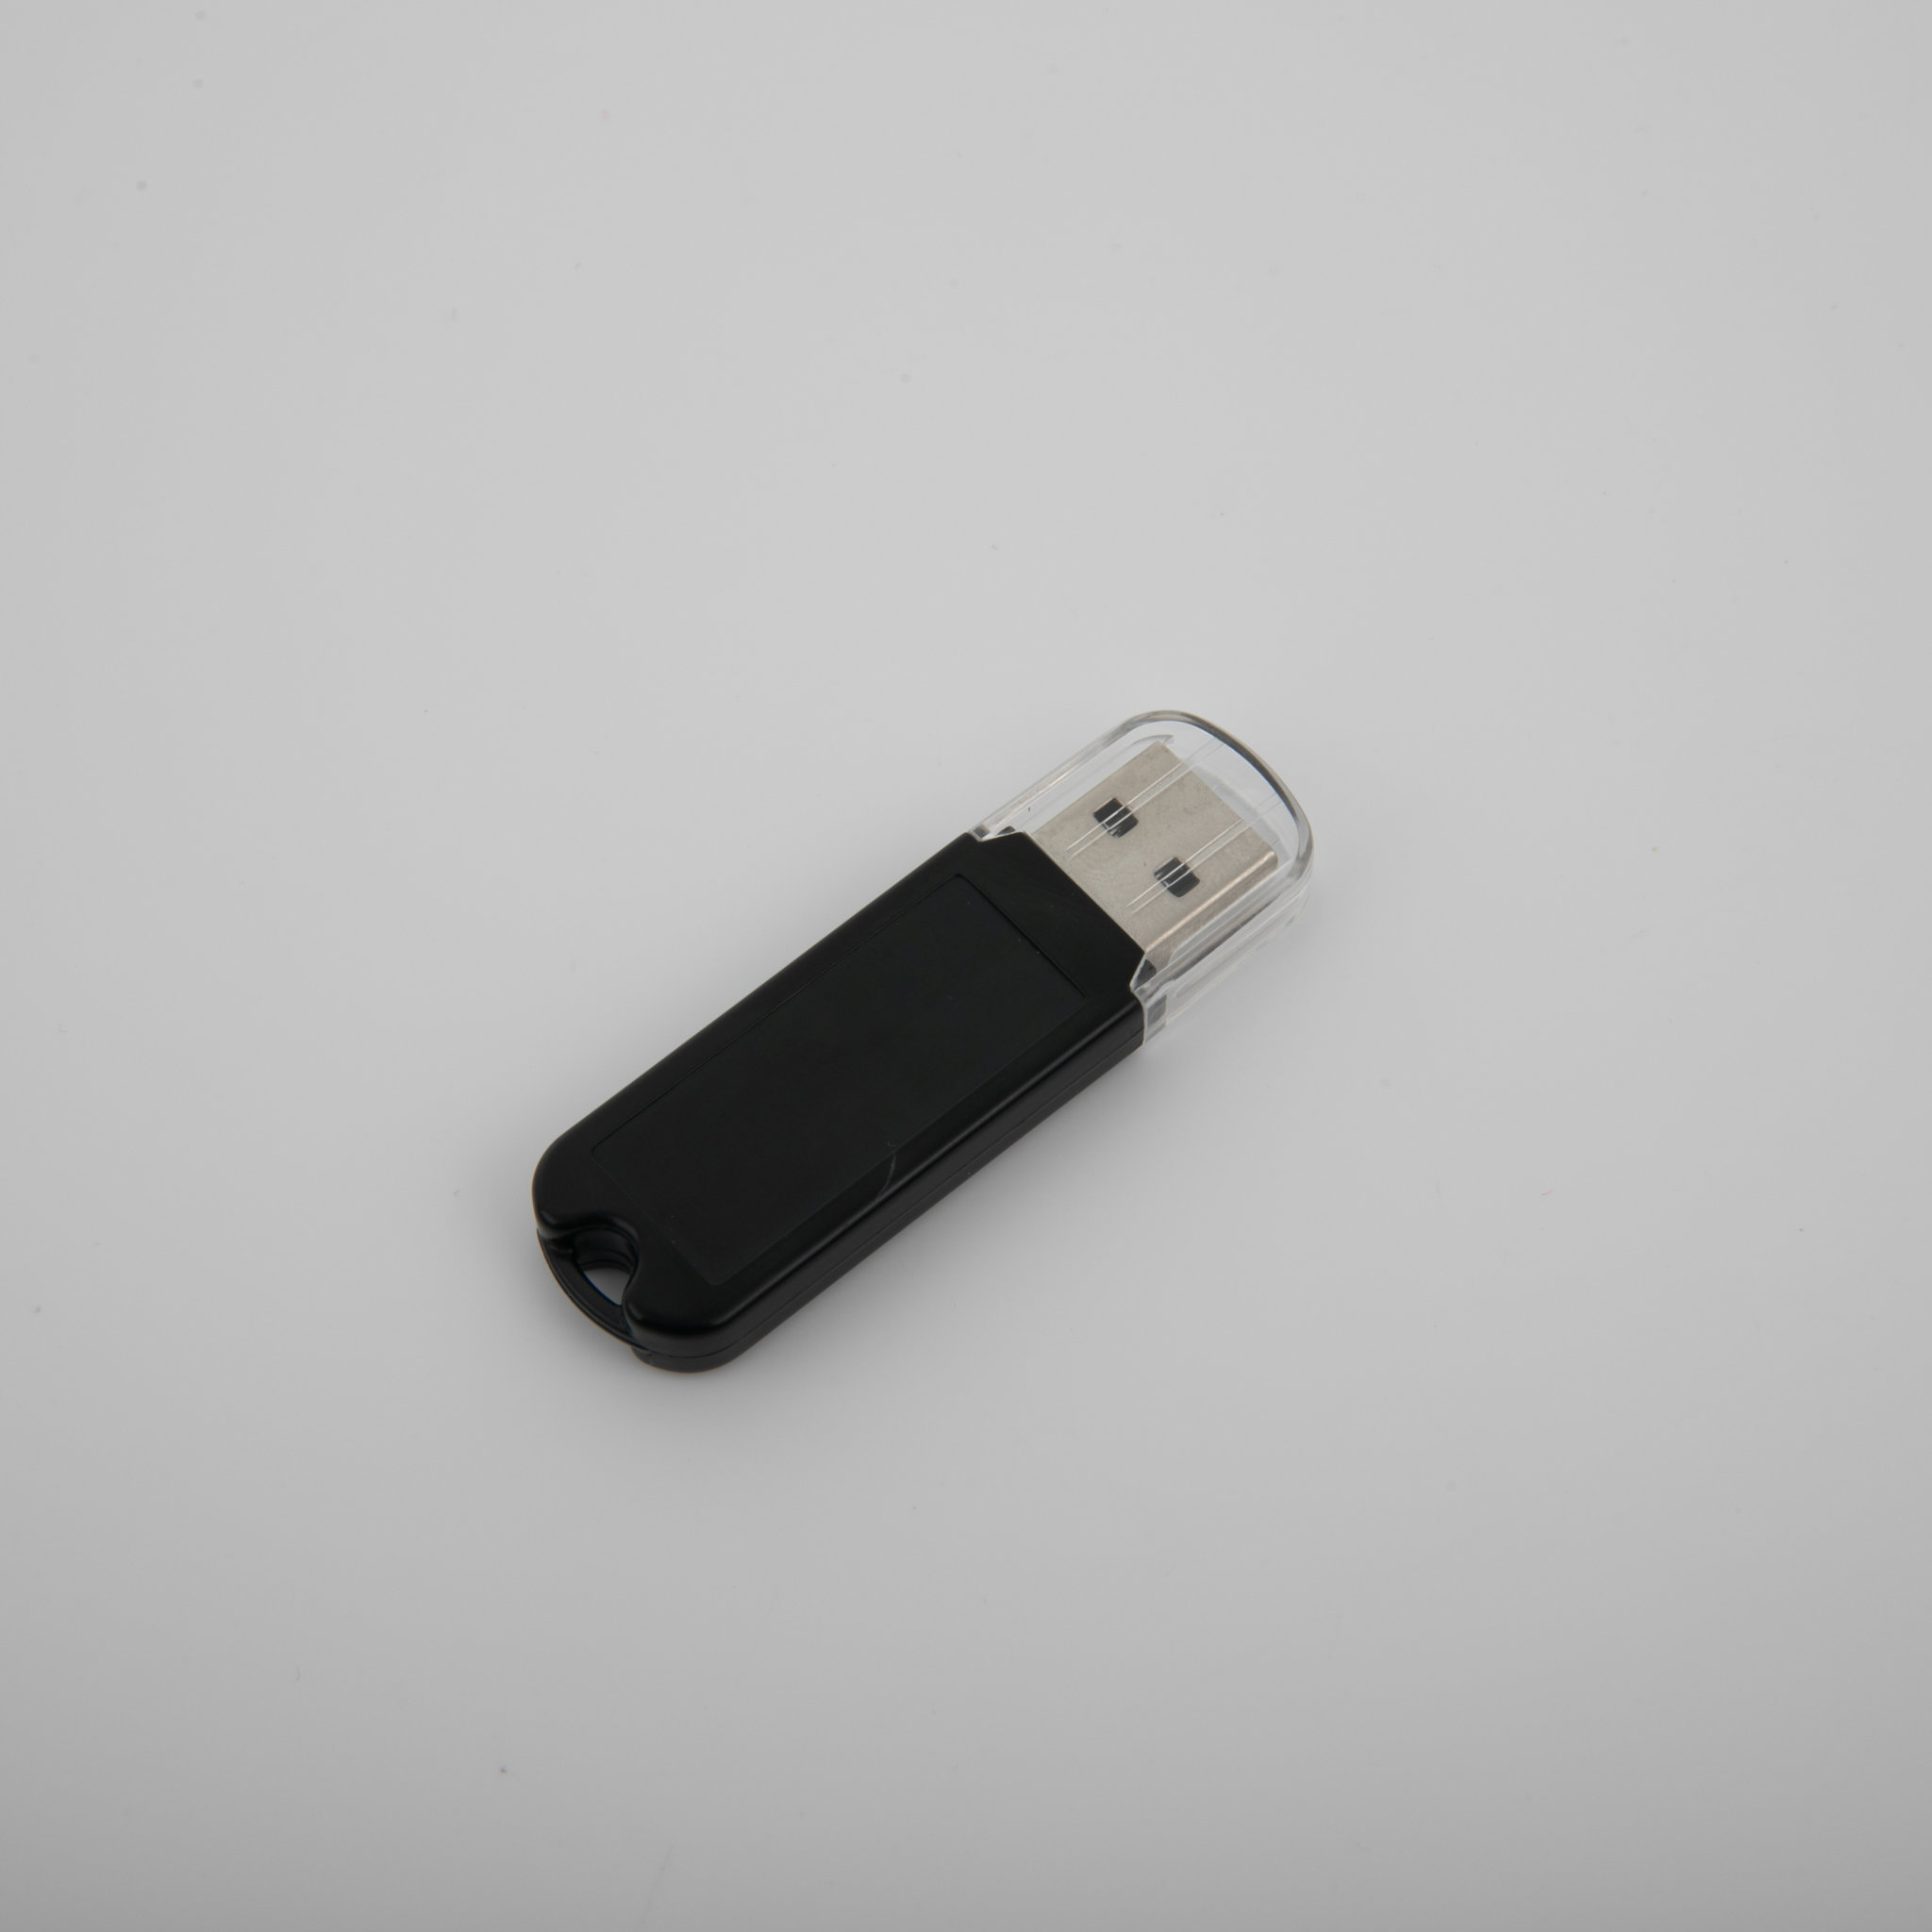 2GB USB Flash Drive With Keyring Hole3